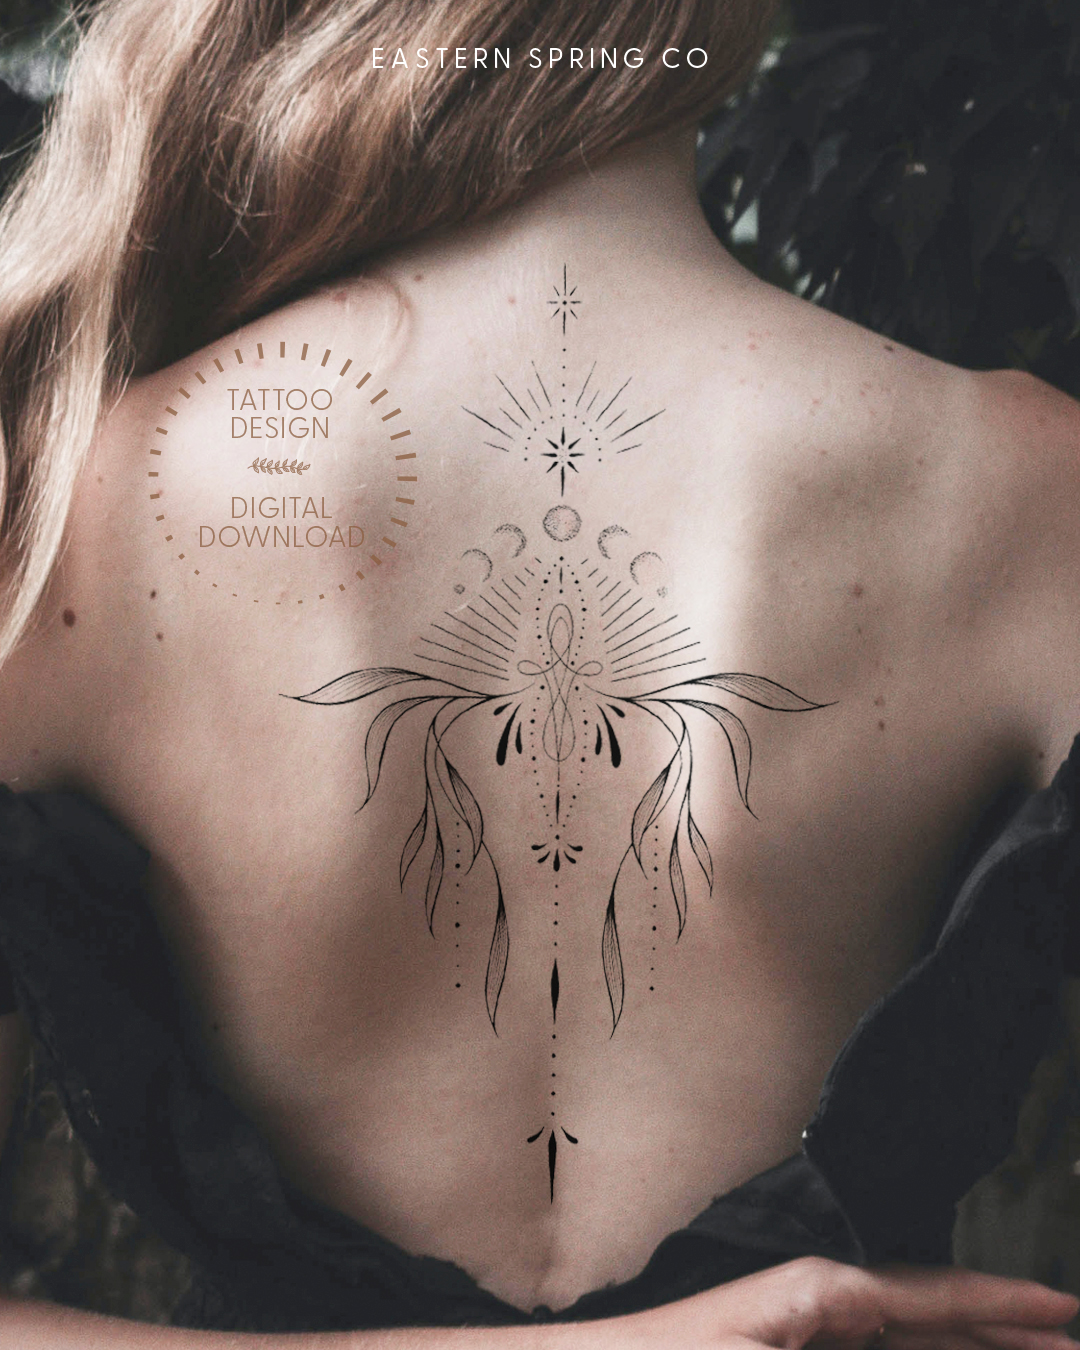 Eastern Spring Tattoo Design by Yenty Jap